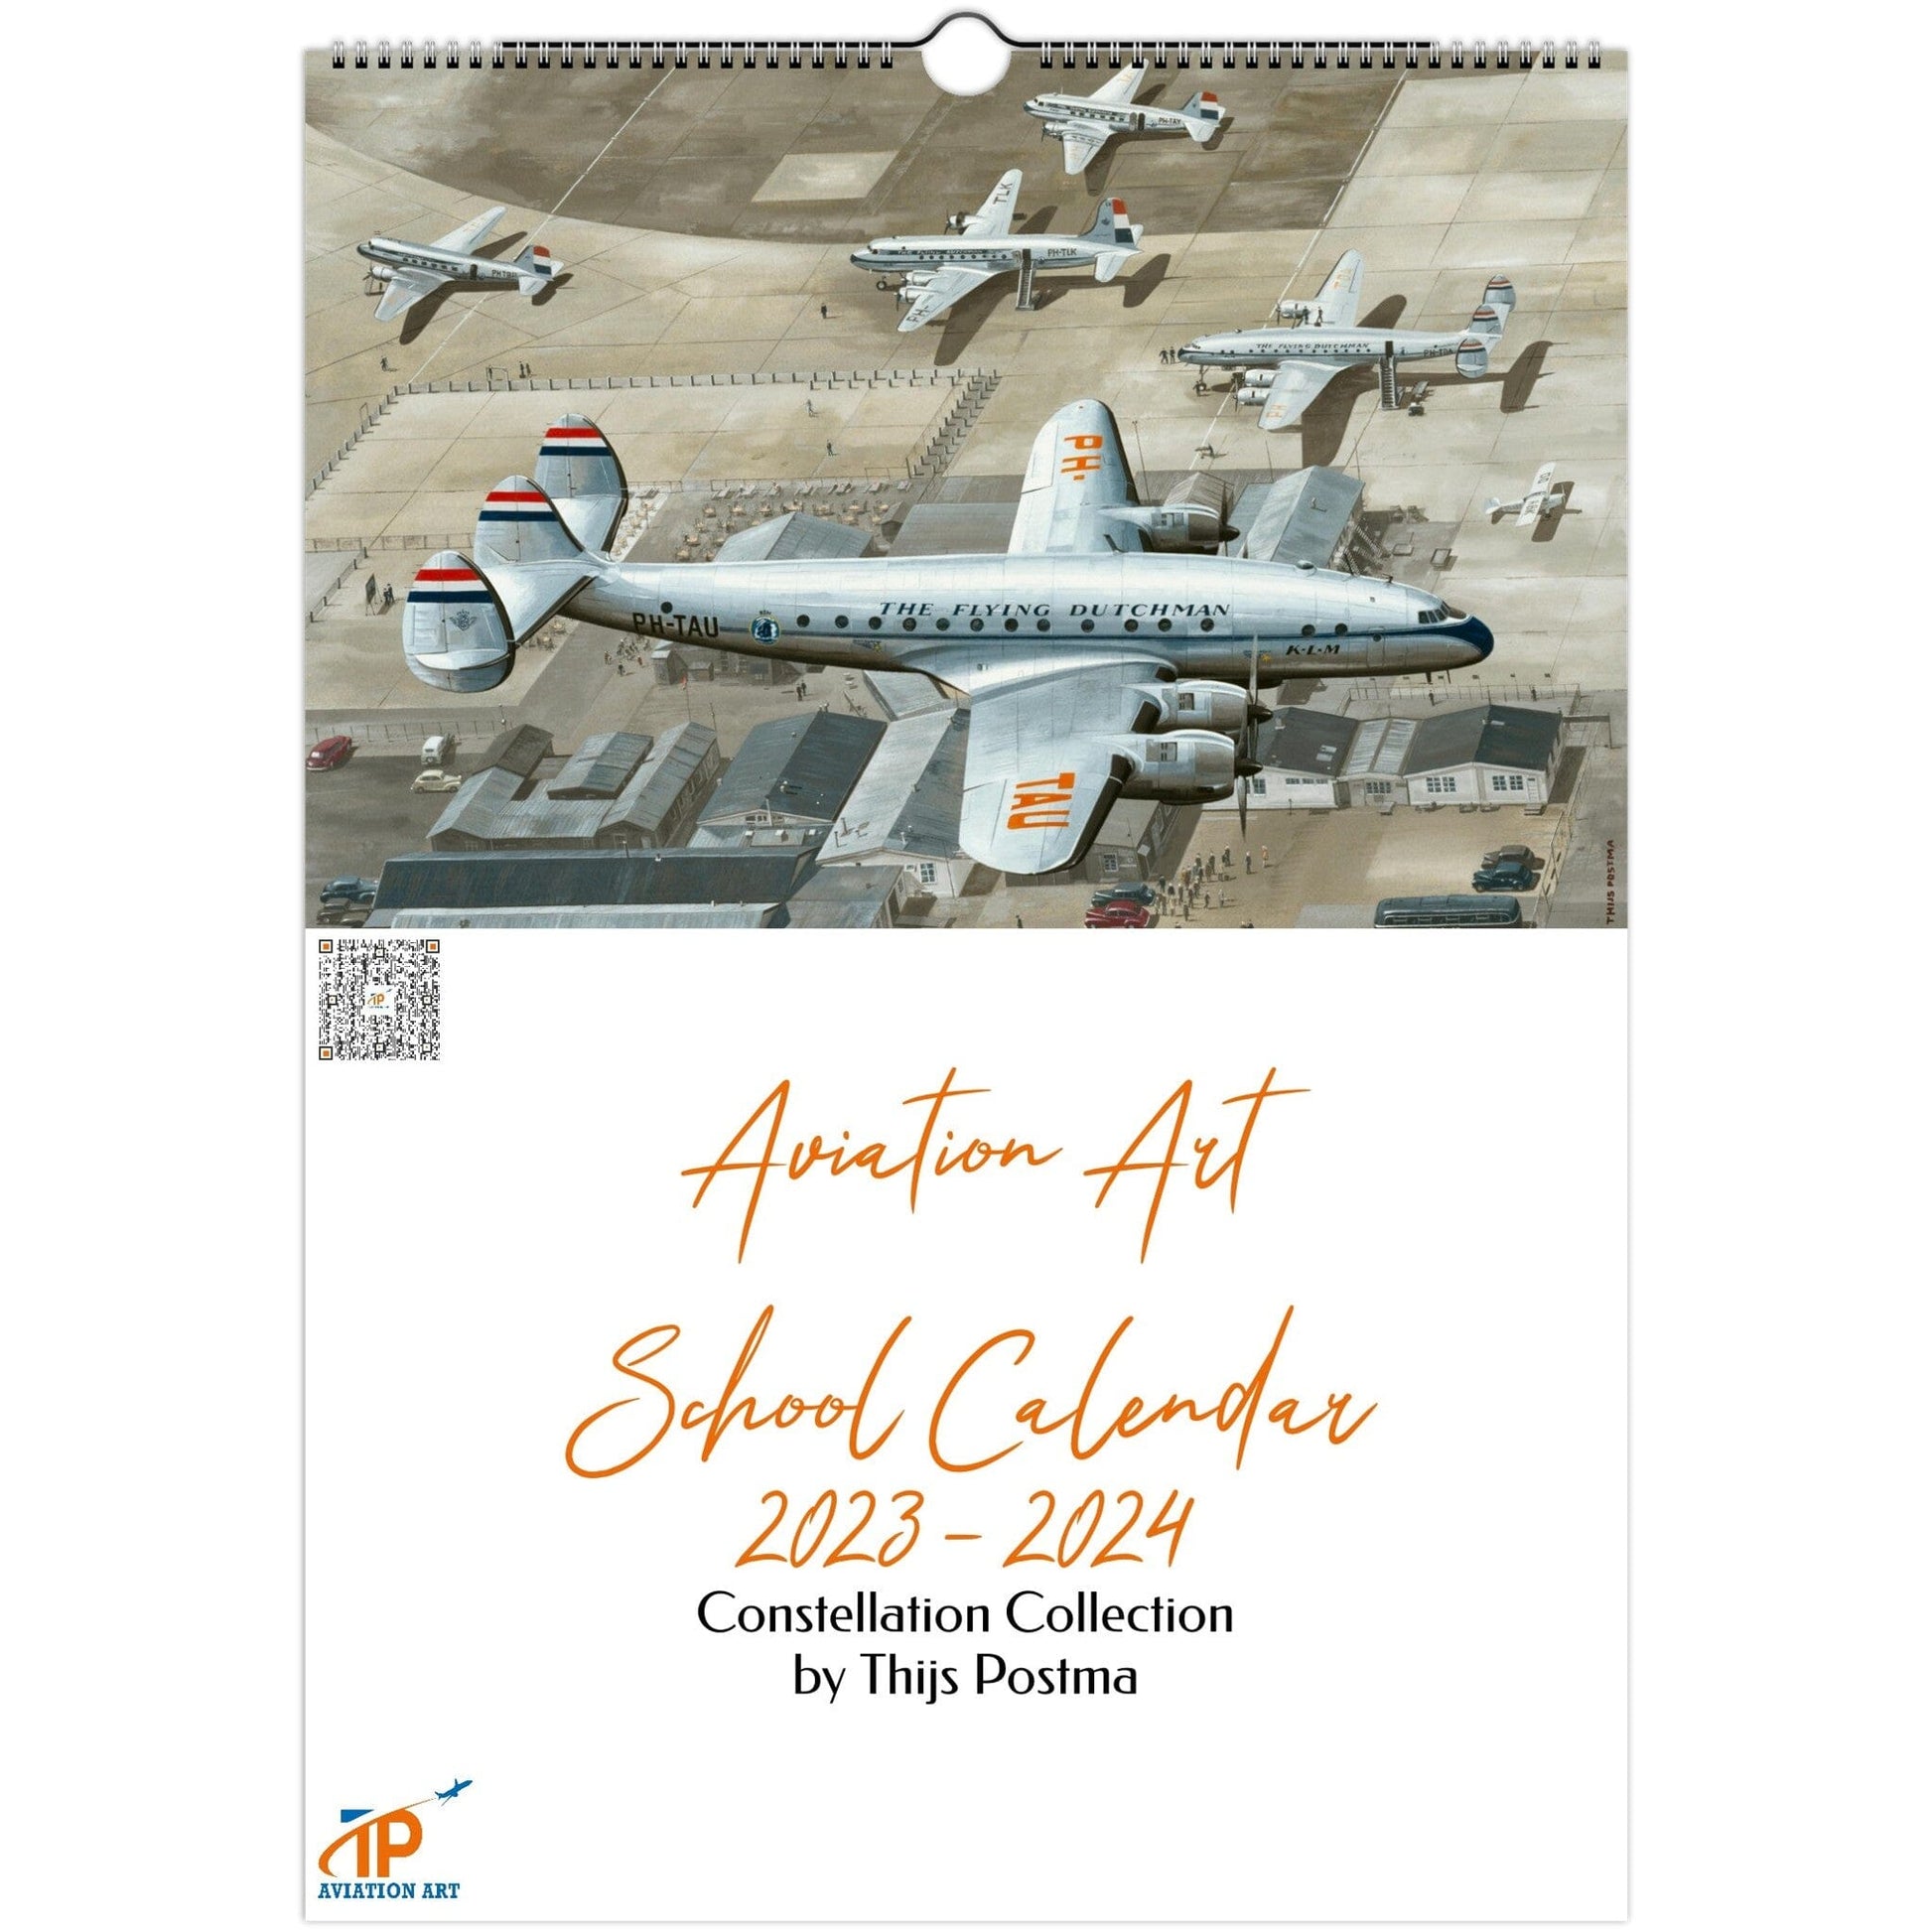 Thijs Postma - Aviation Art School Calendar 2023-2024 - Constellation Collection Calendar TP Aviation Art 